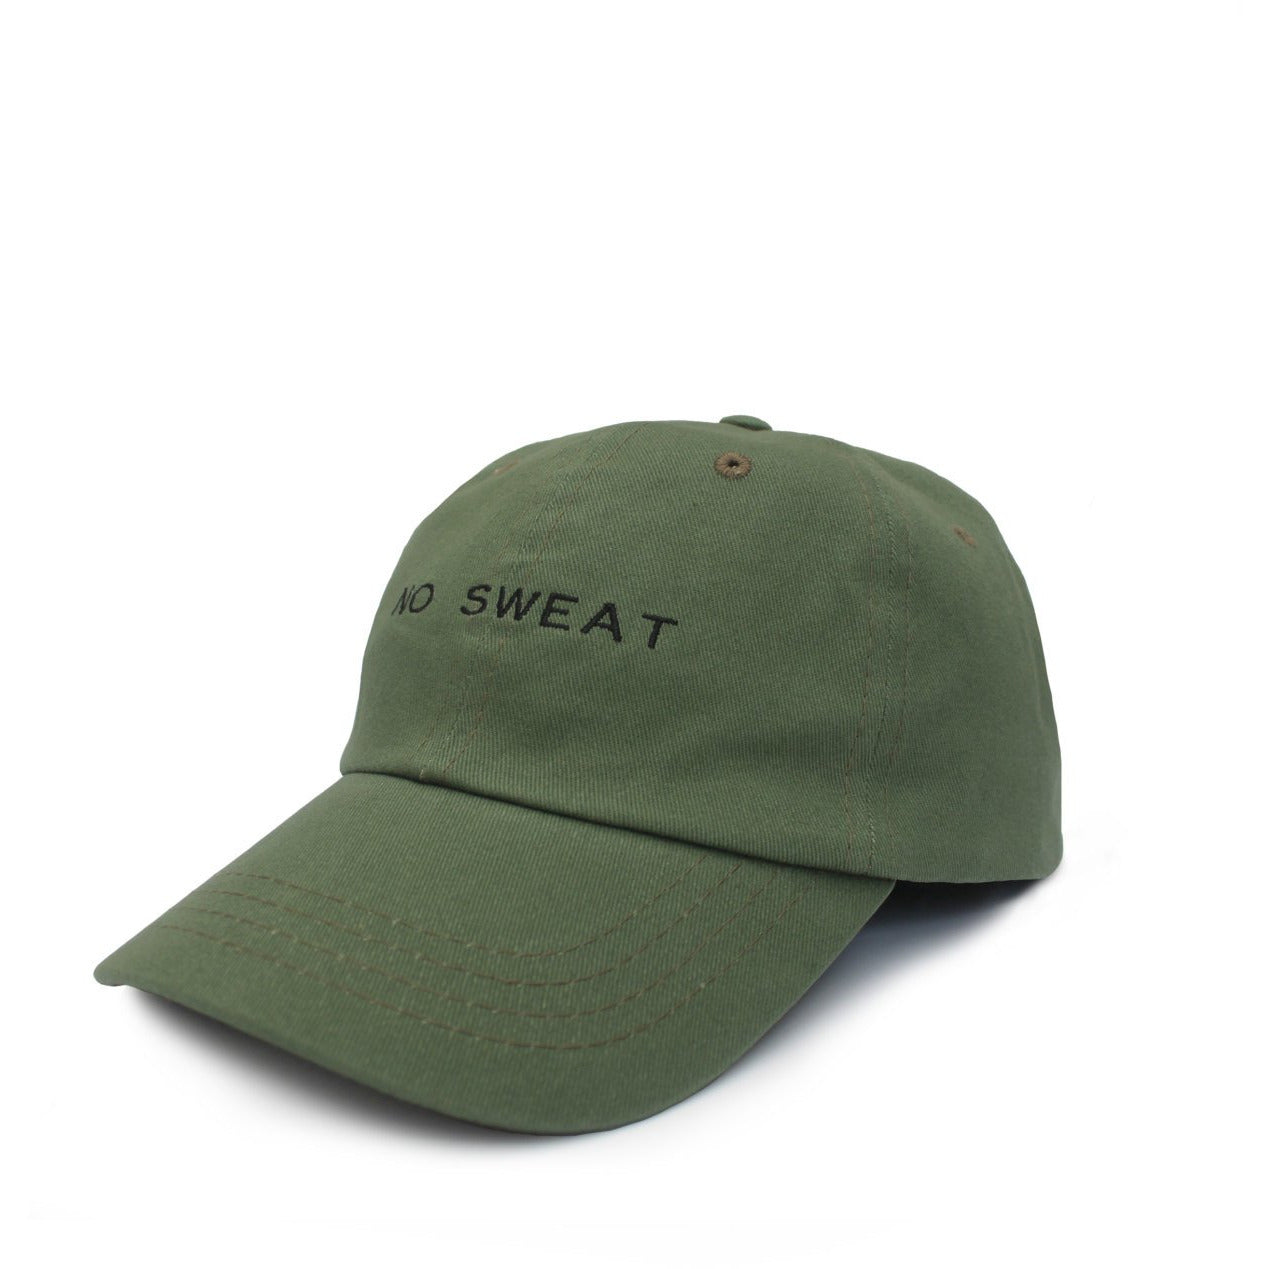 NO SWEAT' Dad Hat (Green Olive)